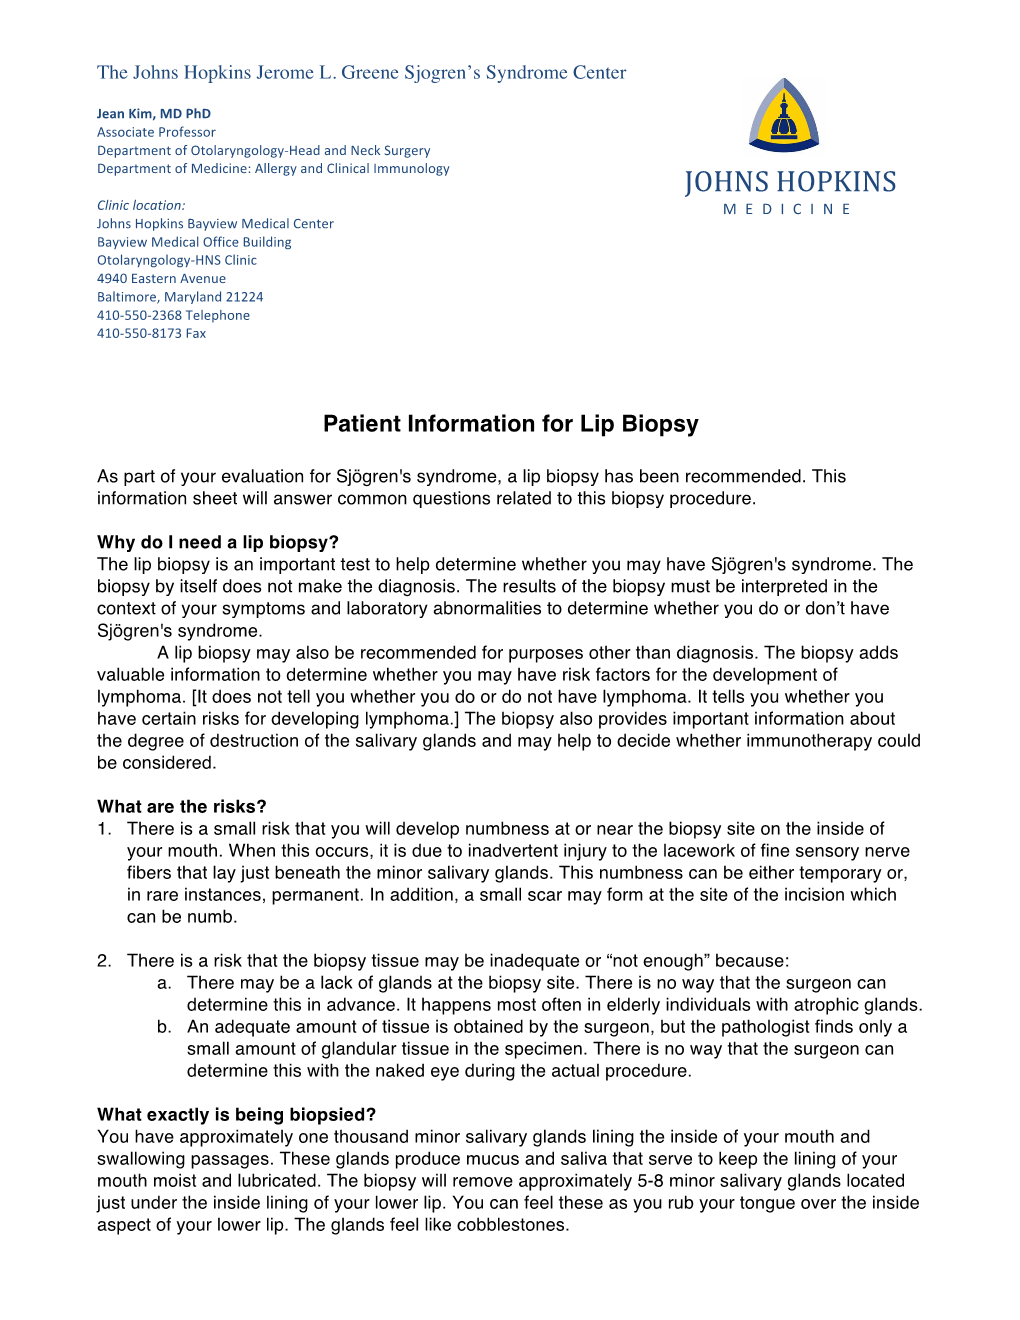 Jkim Edit 121517 Patient Information for Lip Biopsy